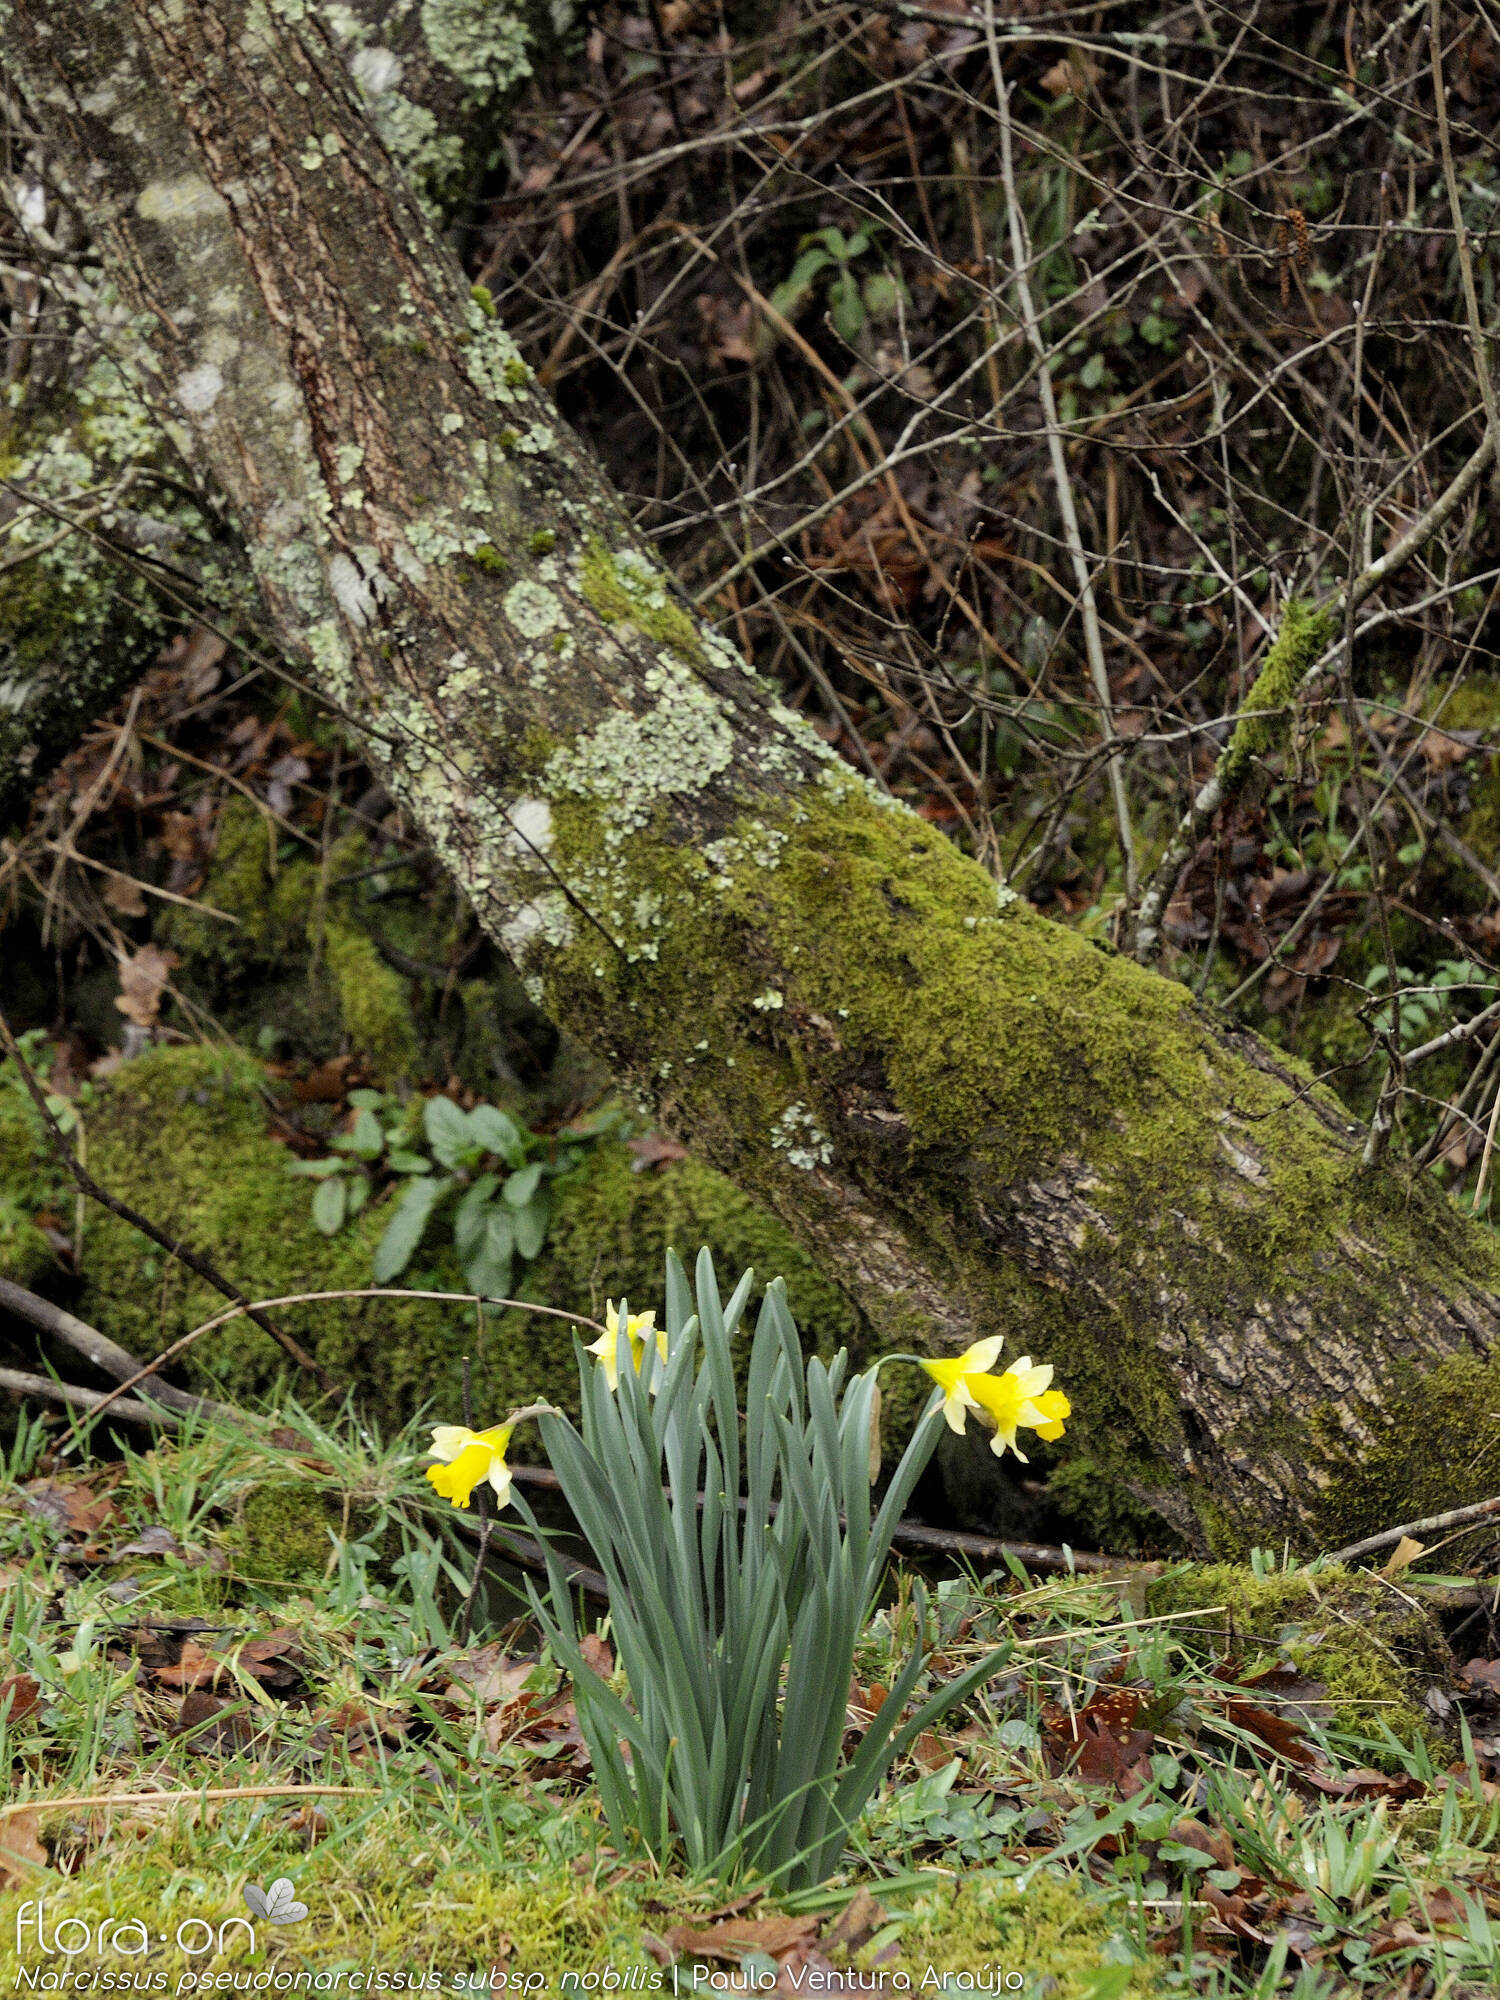 Narcissus pseudonarcissus - Habitat | Paulo Ventura Araújo; CC BY-NC 4.0